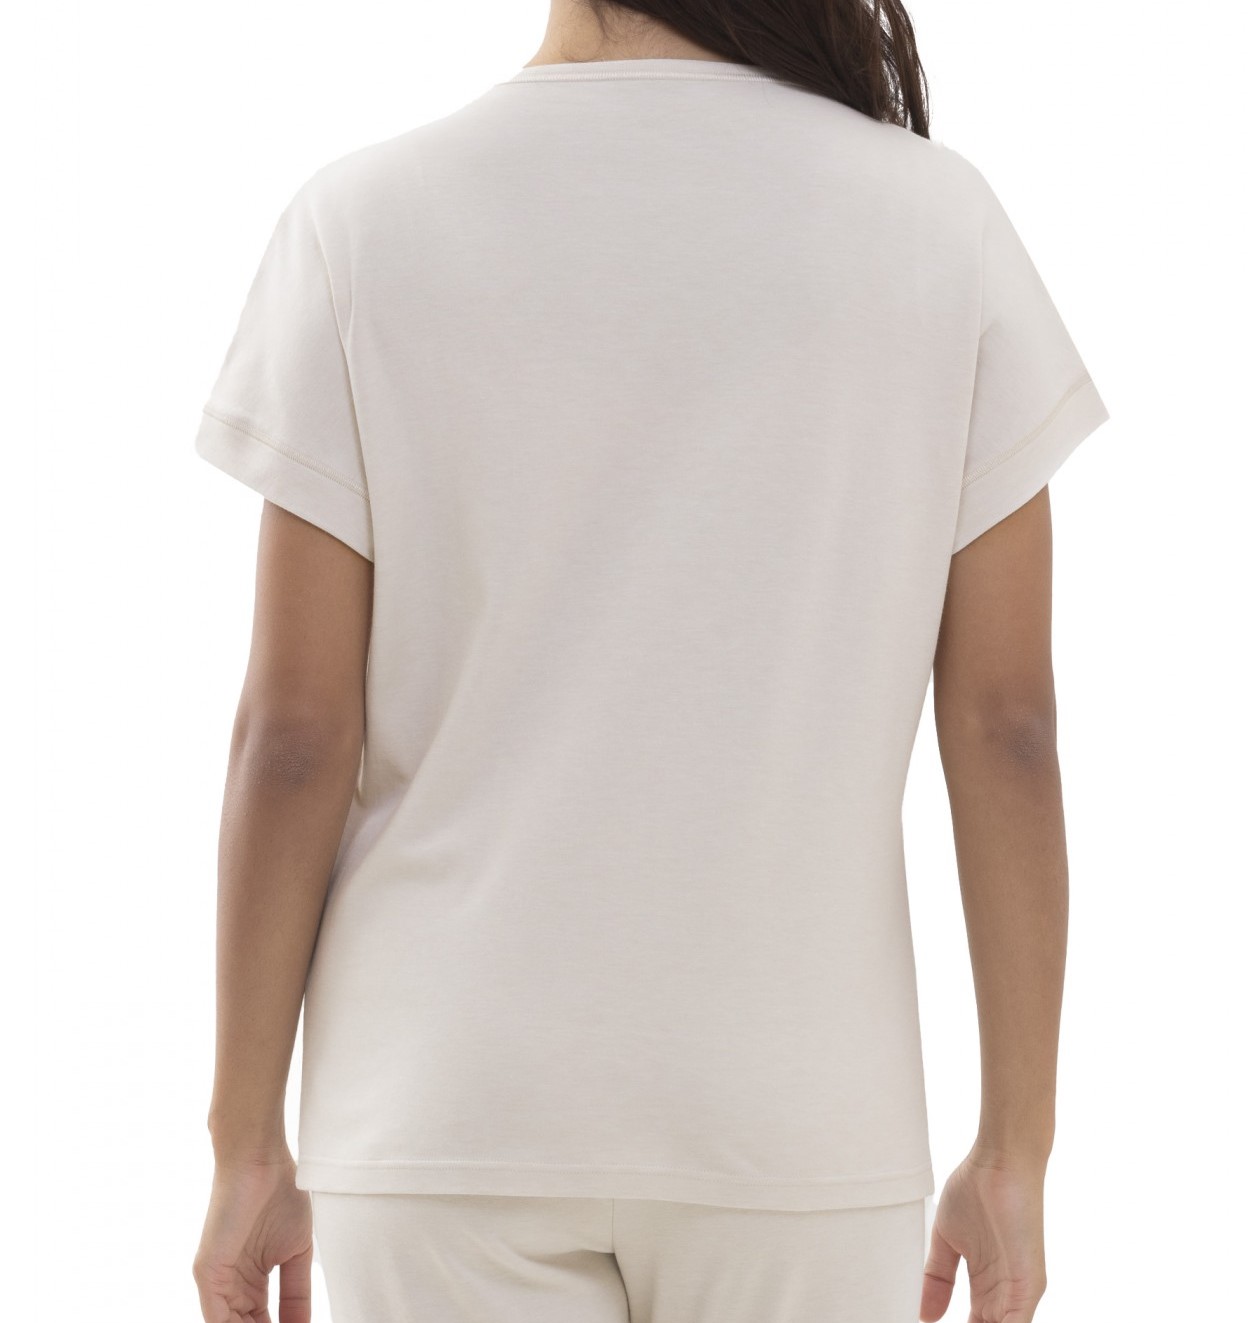 Mey Serie N8TEX 2.0 Damen Shirt kurzarm